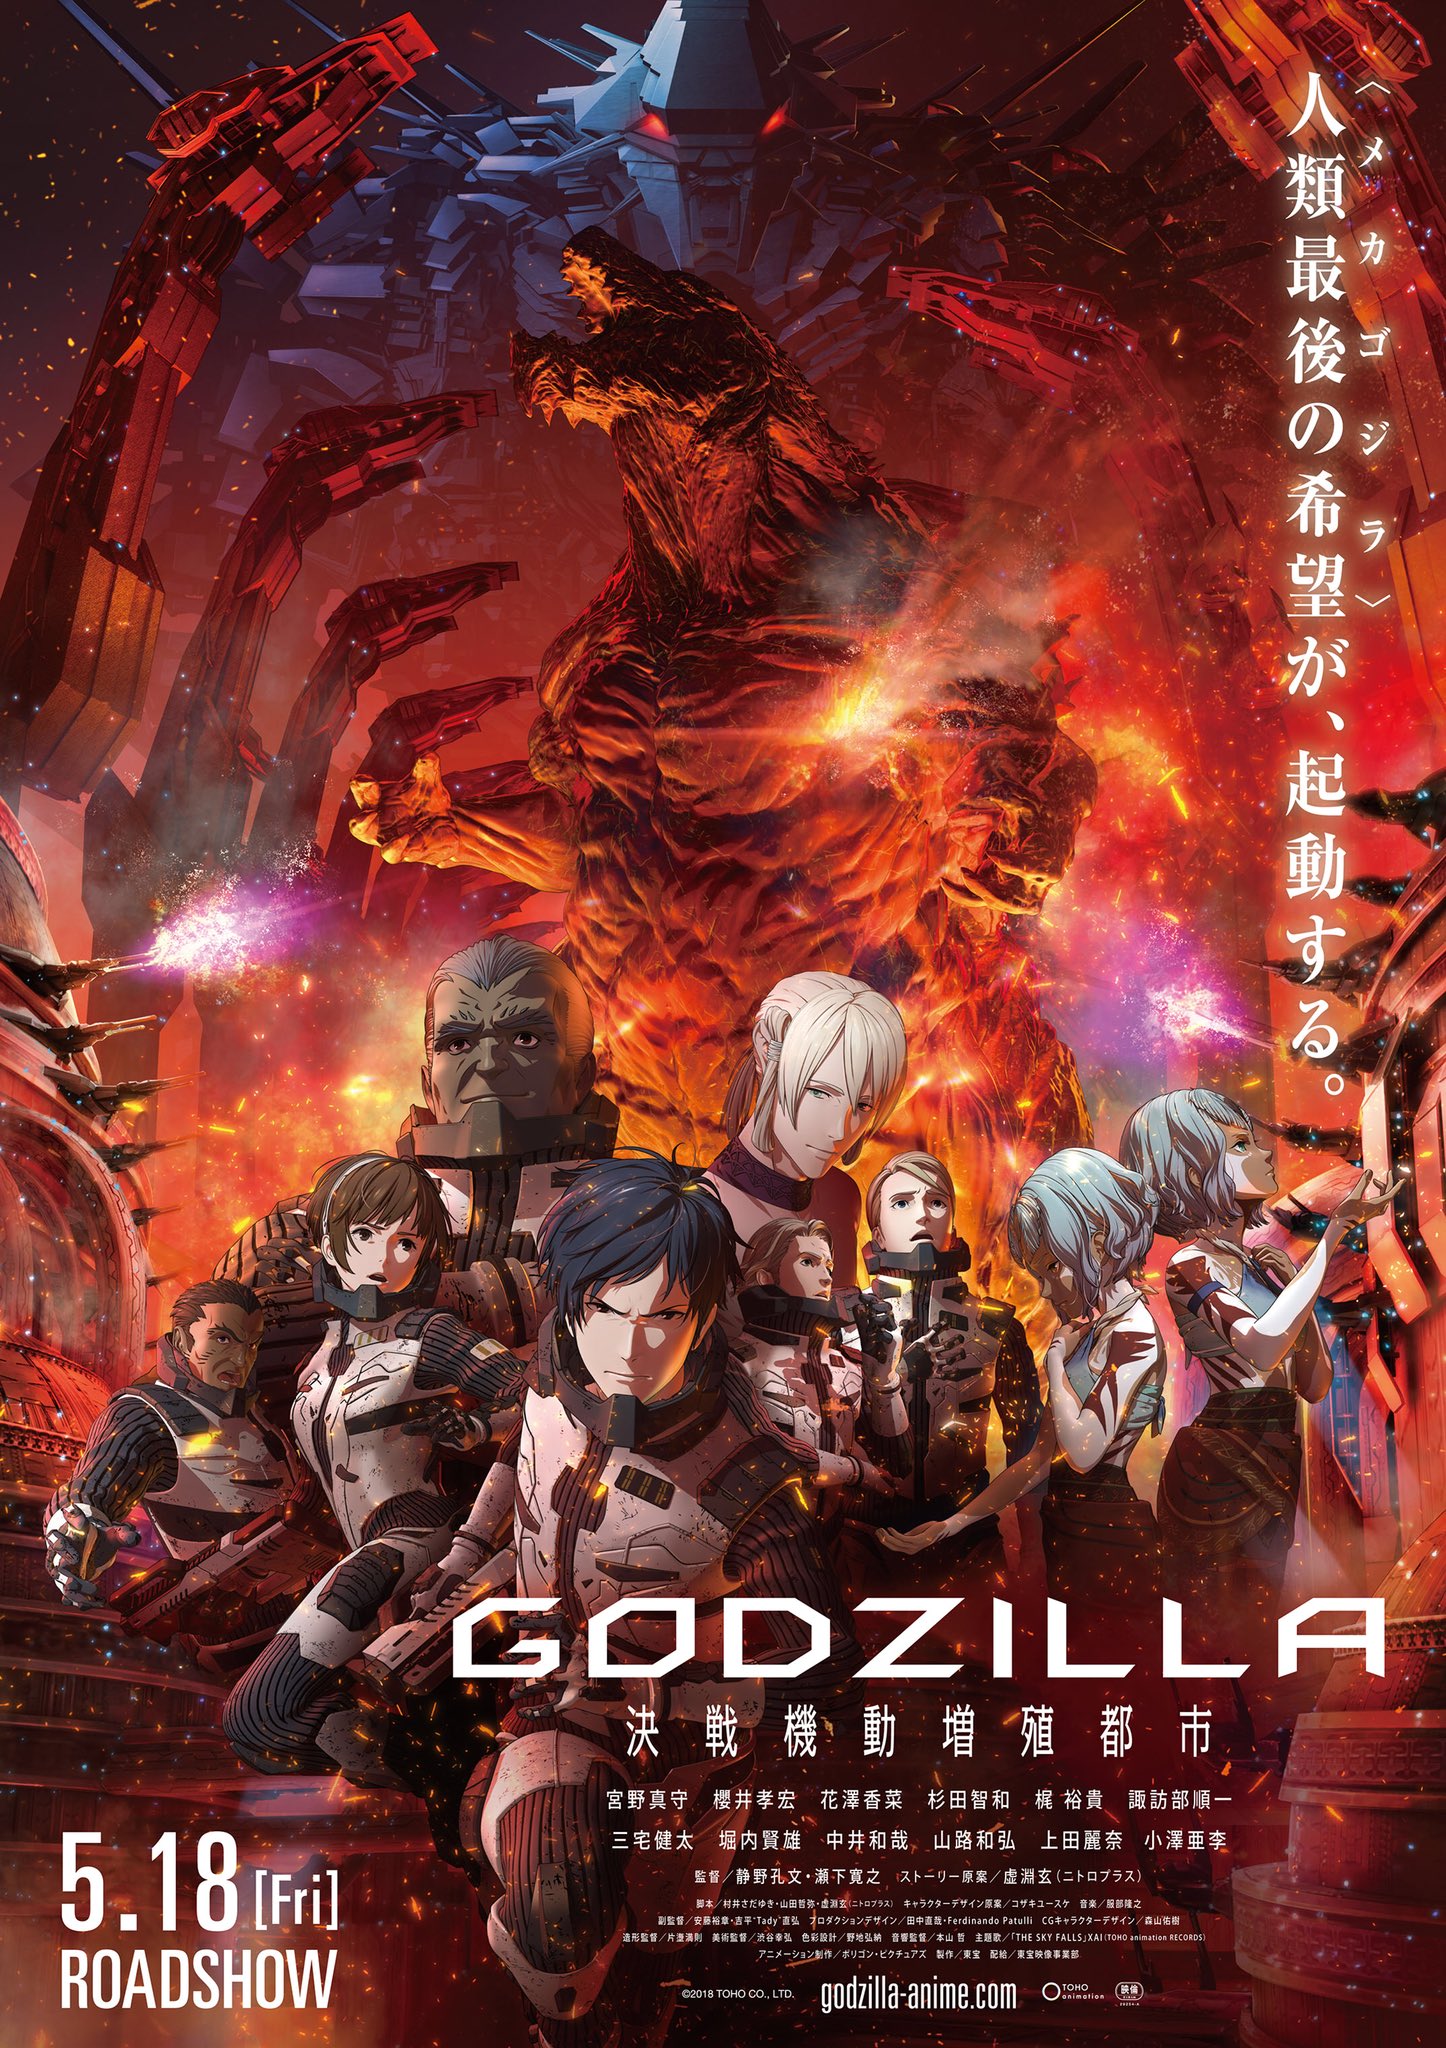 DVD Anime Godzilla SP Singular Point Complete TV Series Vol 1-13 English  Sub Dub | eBay